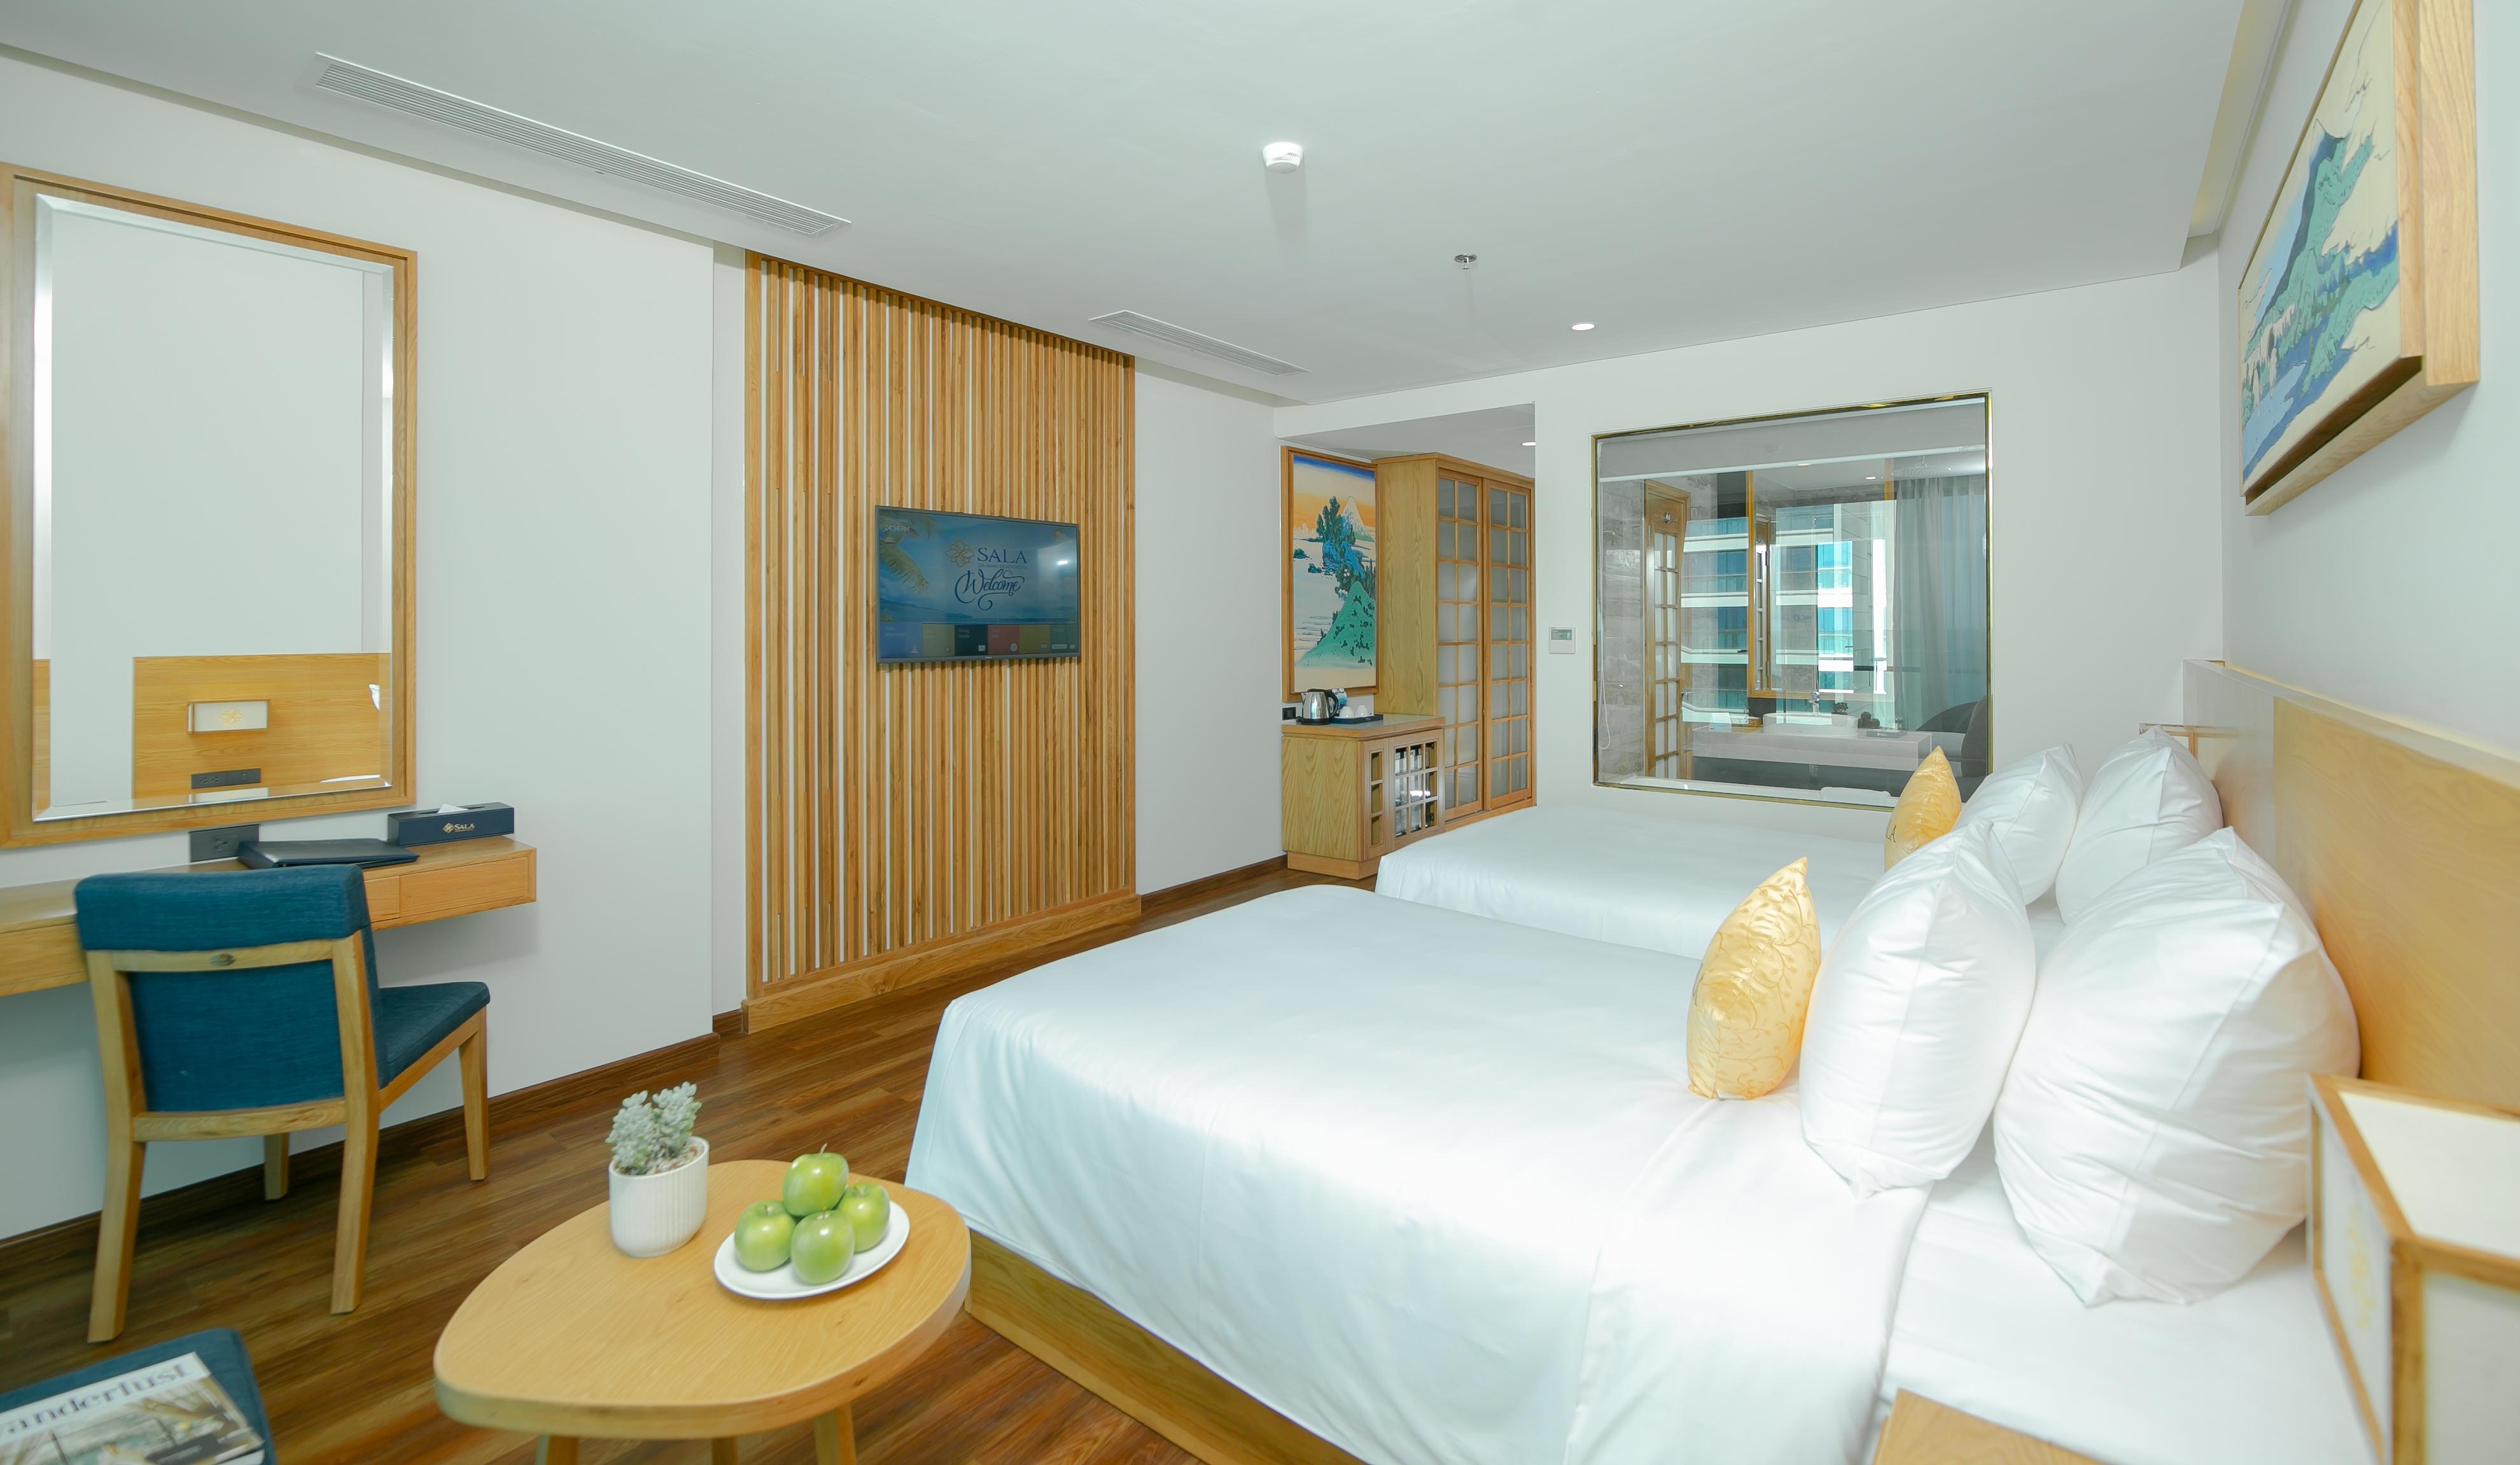 Sala Danang Beach Hotel Extérieur photo